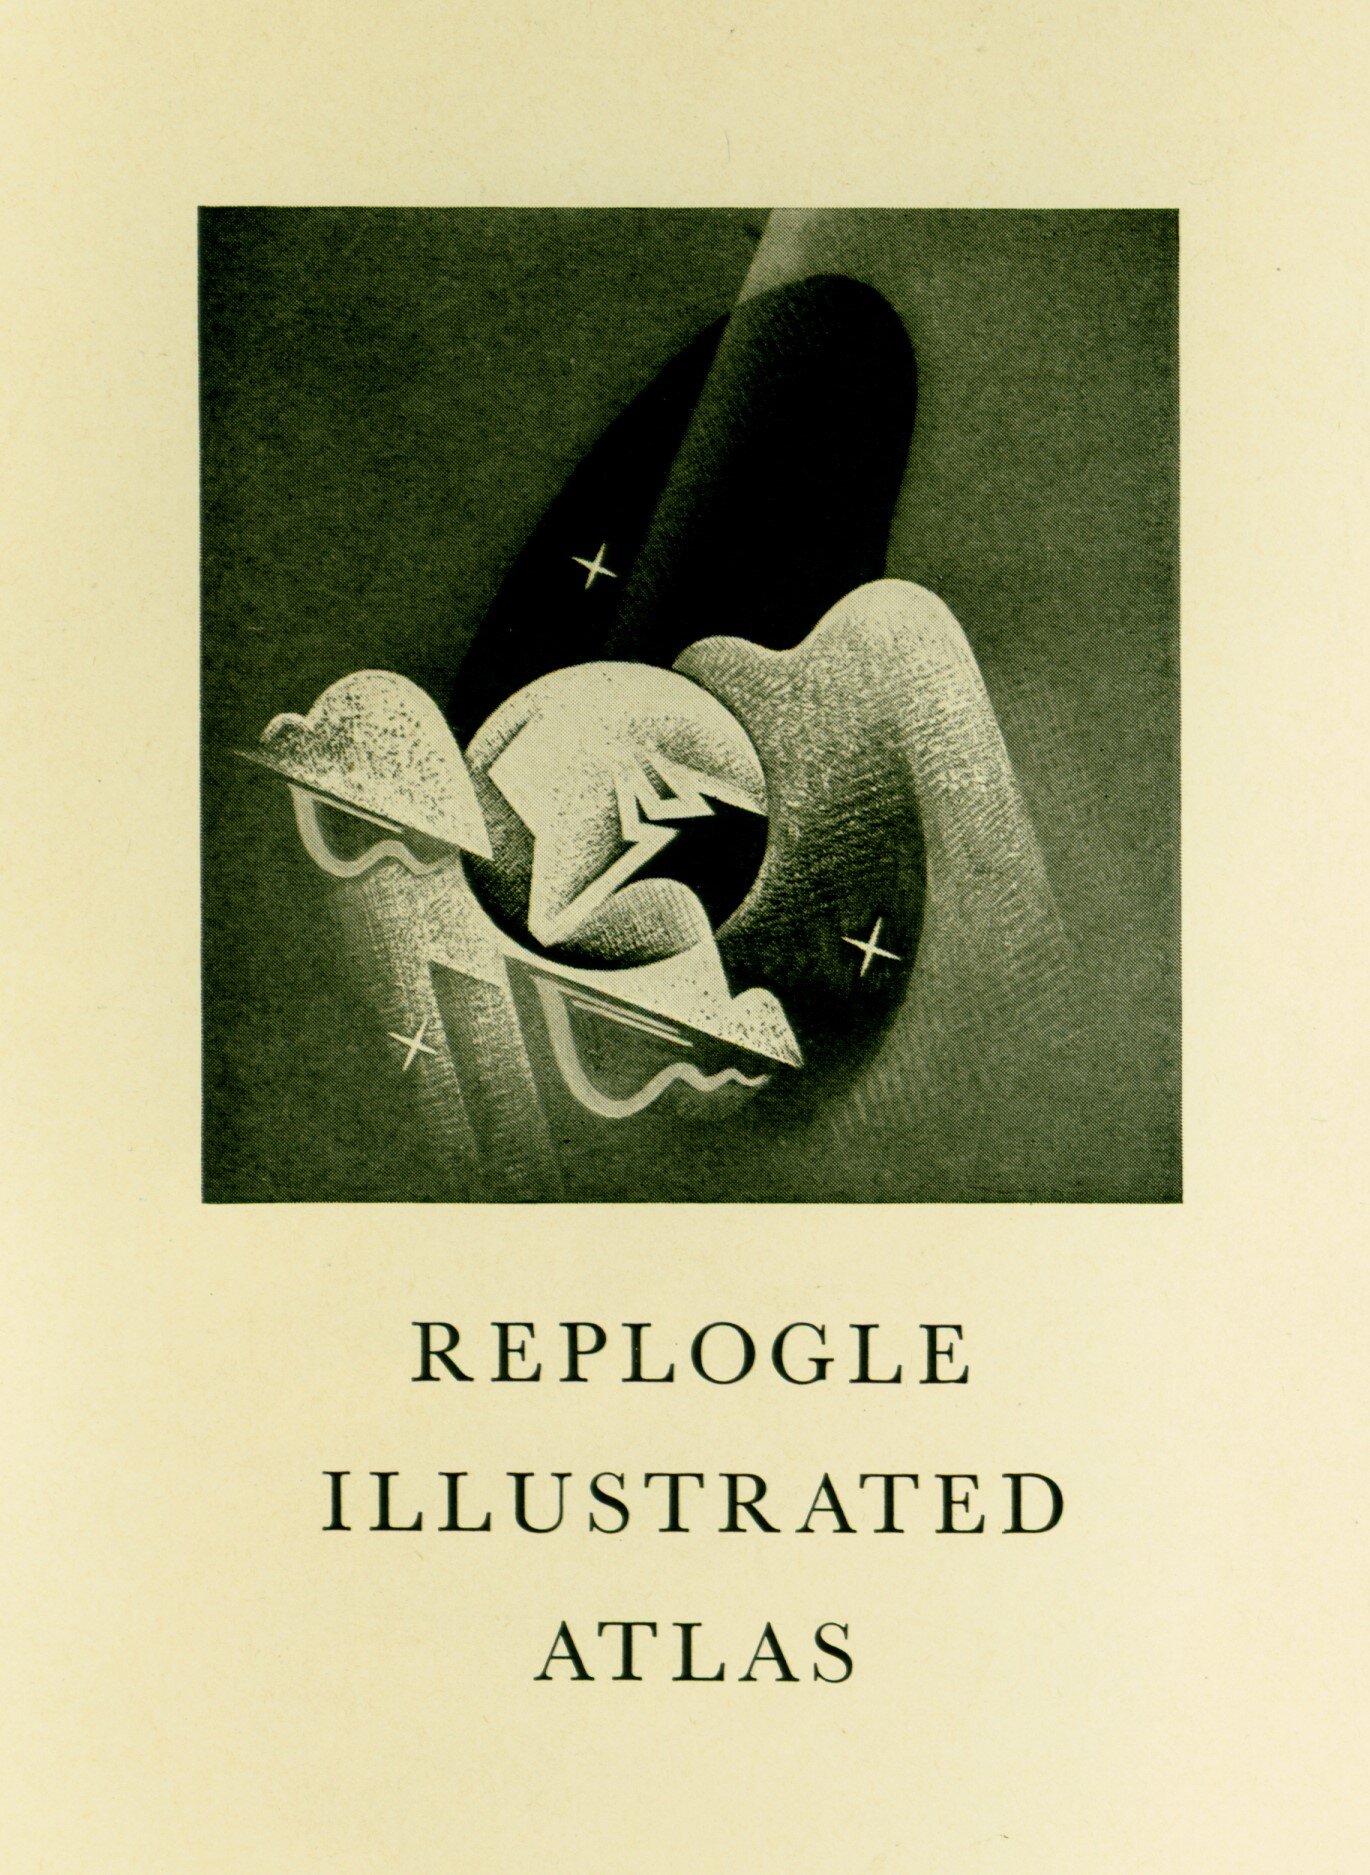  Replogle Illustrated Atlas 